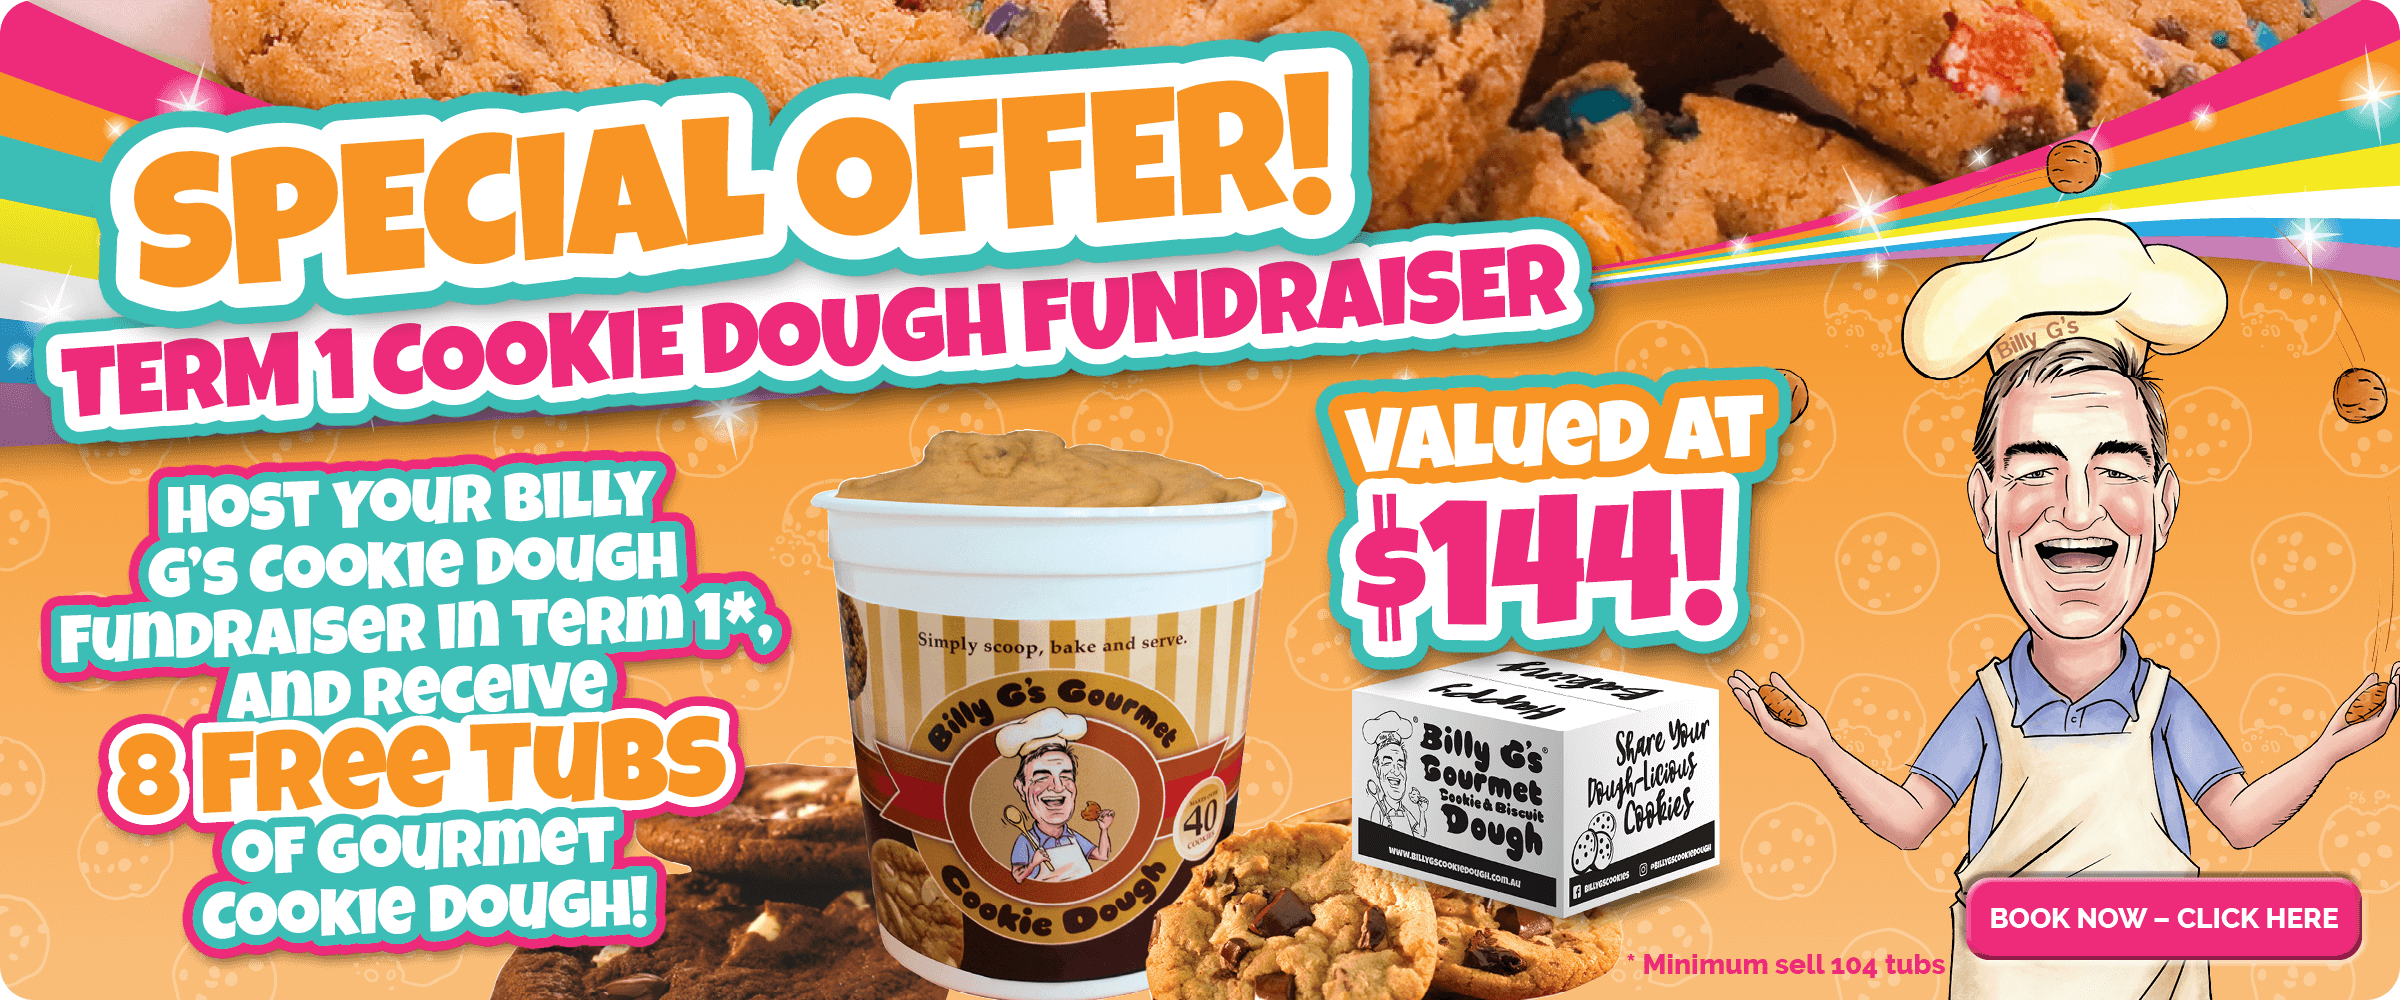 Cookie dough fundraiser - Fundraising